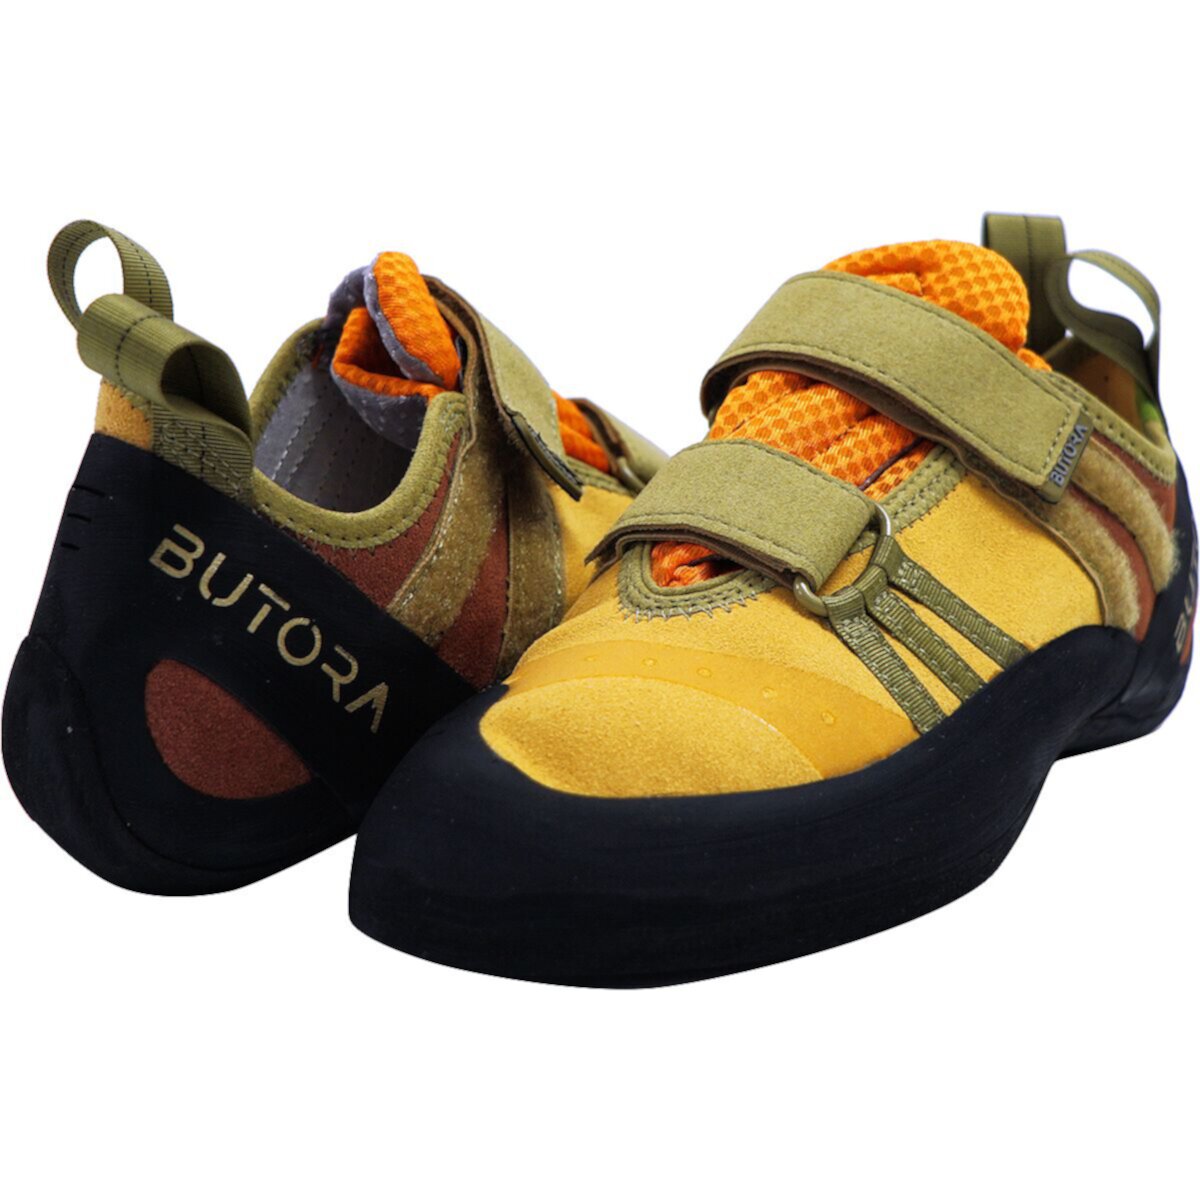 Ботинки для скалолазания Butora Endeavour Tight Fit Butora